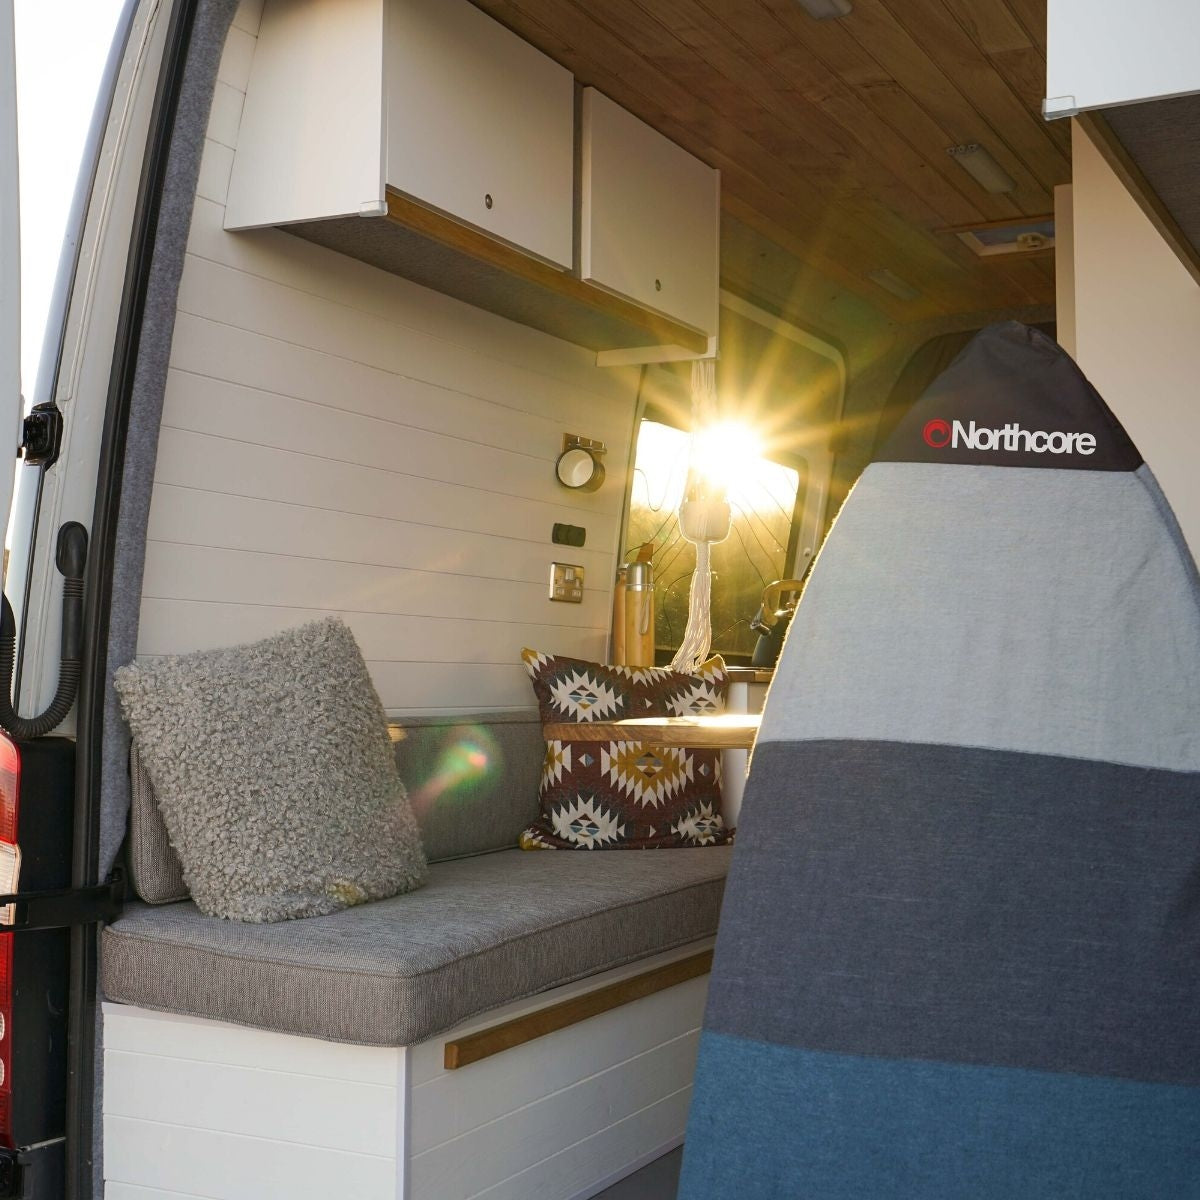 Northcore Retro Stripe Shortboard Sock- 6'0"- Van Life Camper Van